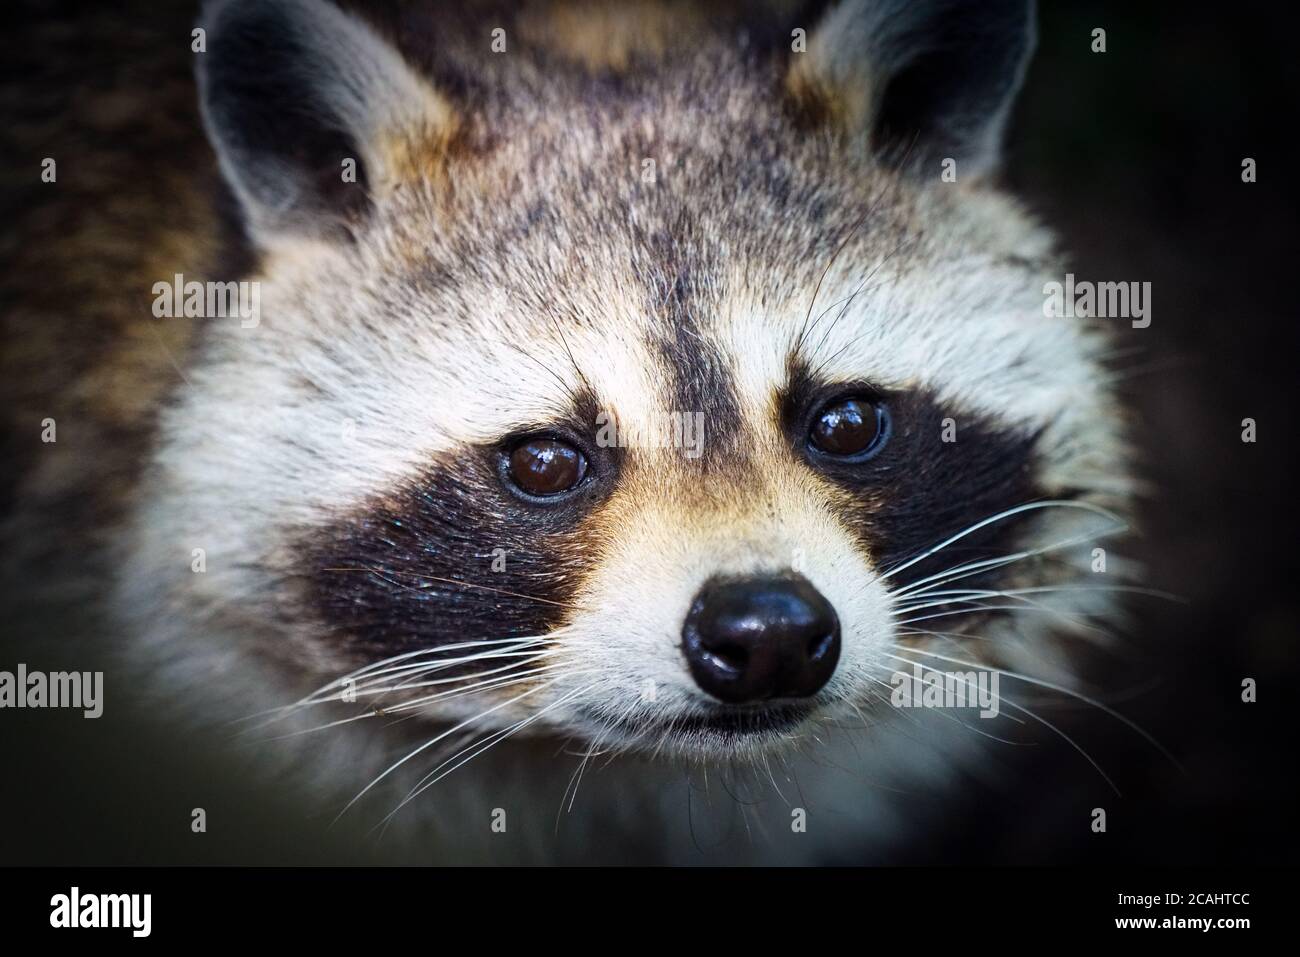 Montreal,Quebec,Canada,July 25, 2020.Close-up of a raccoon's face.Credit:Mario Beauregard/Alamy News Stock Photo